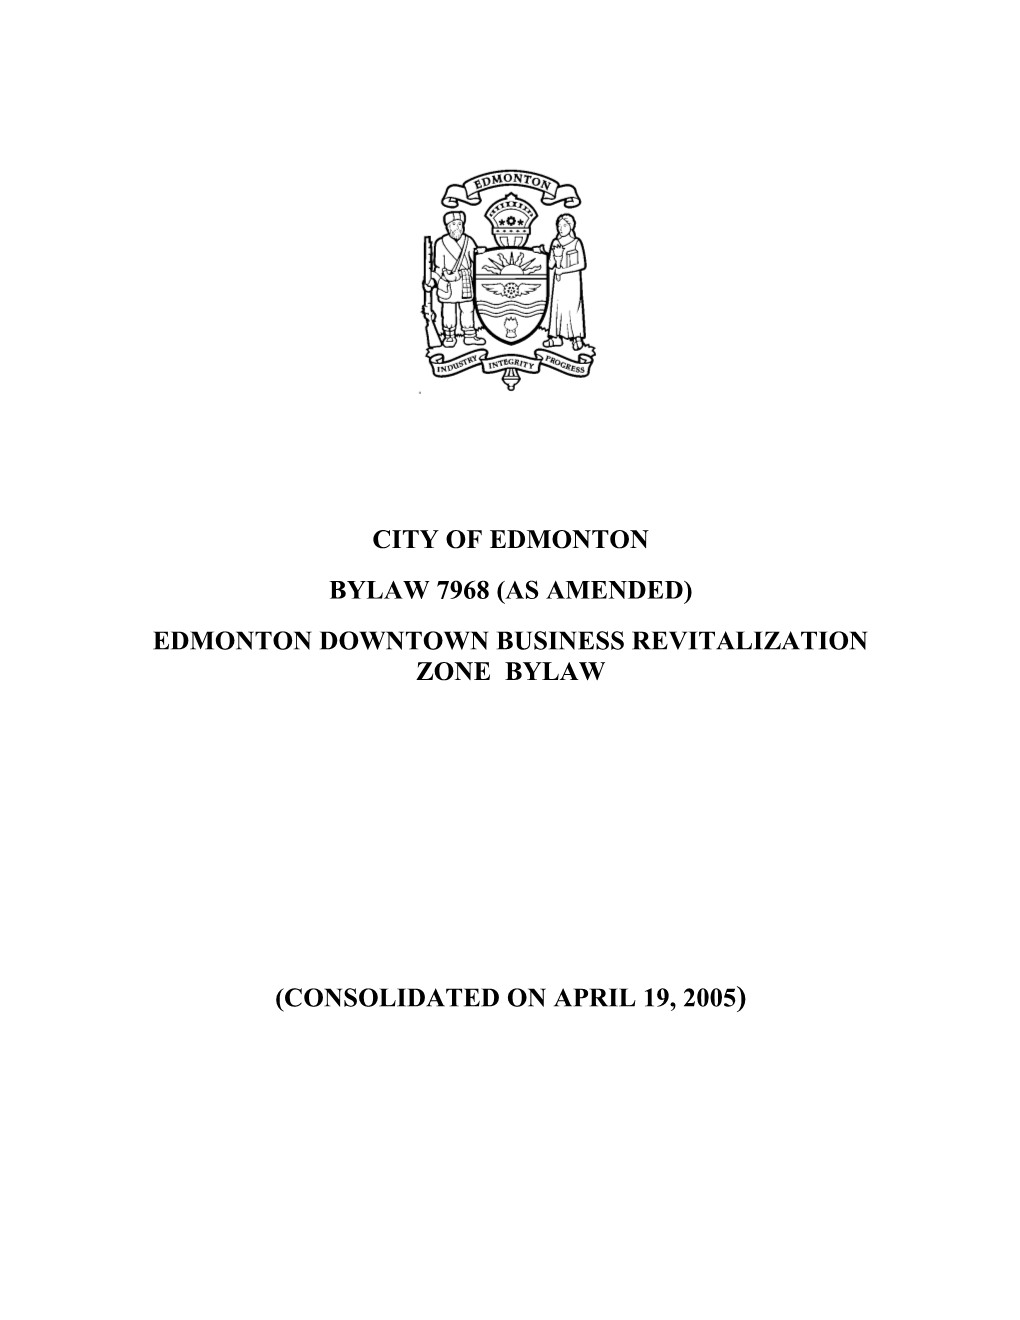 EDMONTON DOWNTOWN Business Revitalization Zone Bylaw 7968